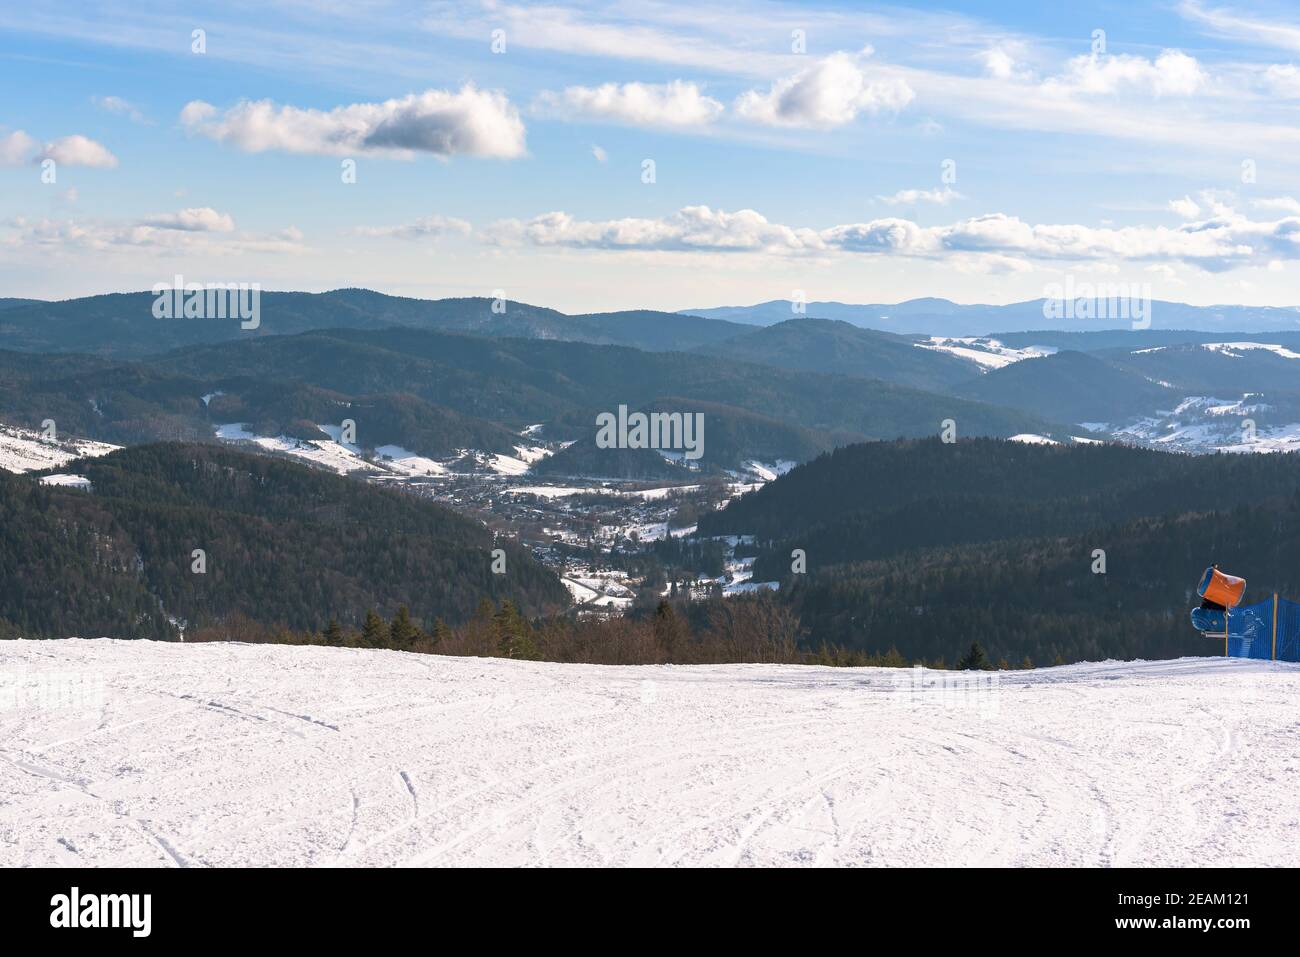 Beskid mountains seen from Jaworzyna Krynicka ski slope Stock Photo